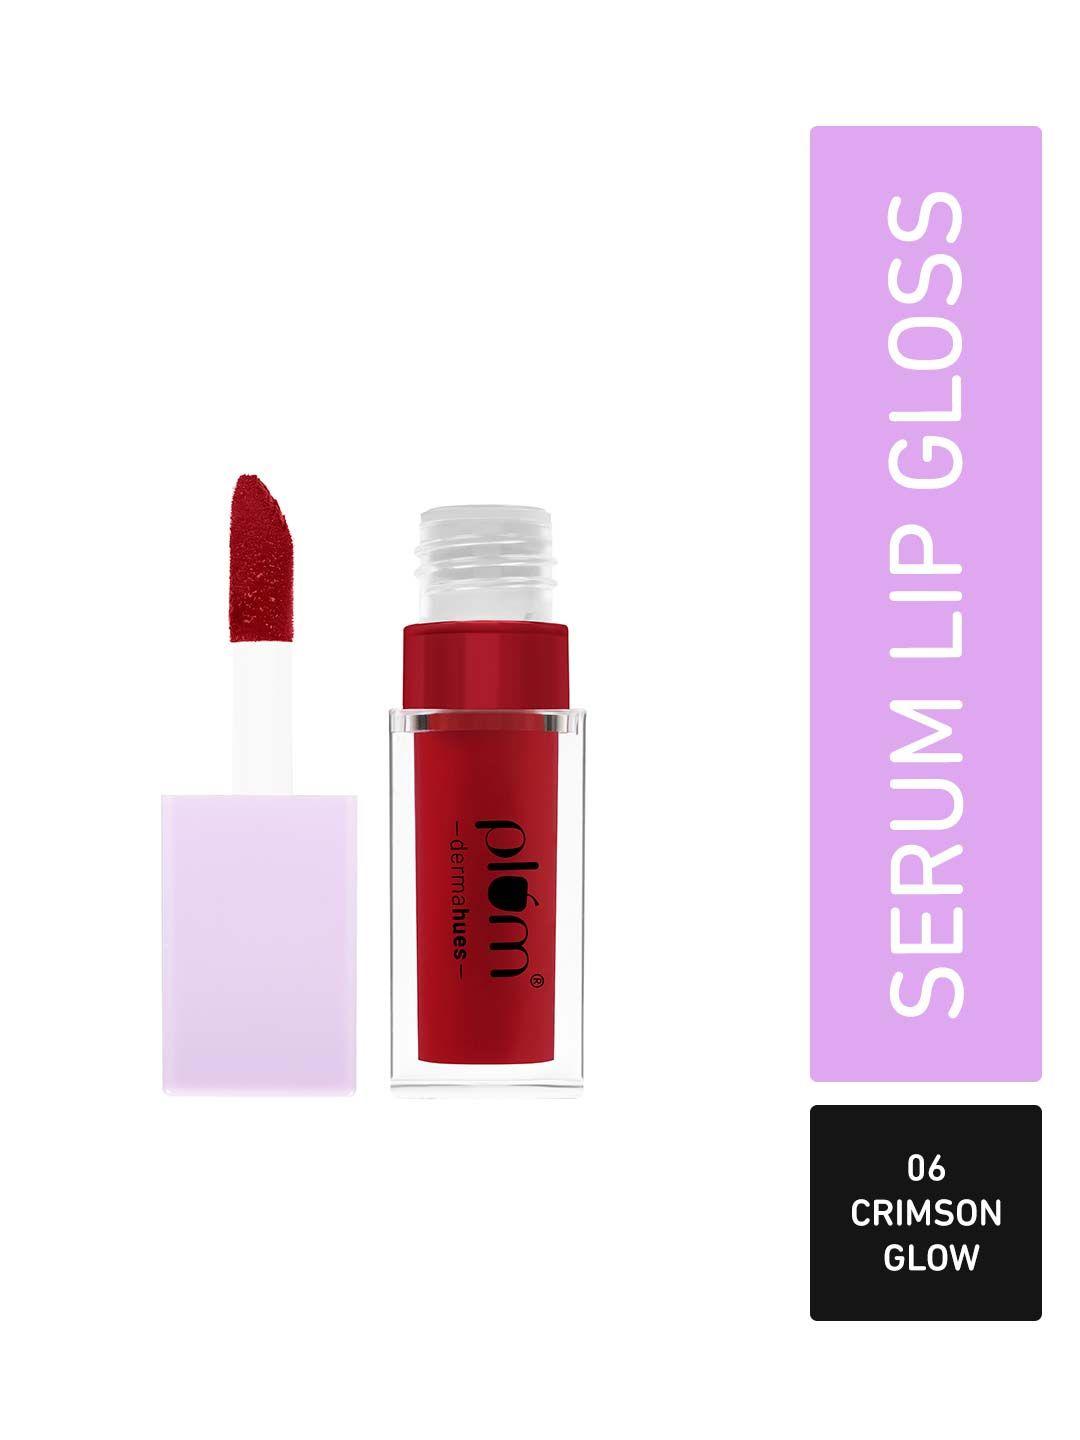 plum keep it glossy highly pigmented serum lip gloss - crimson glow 06